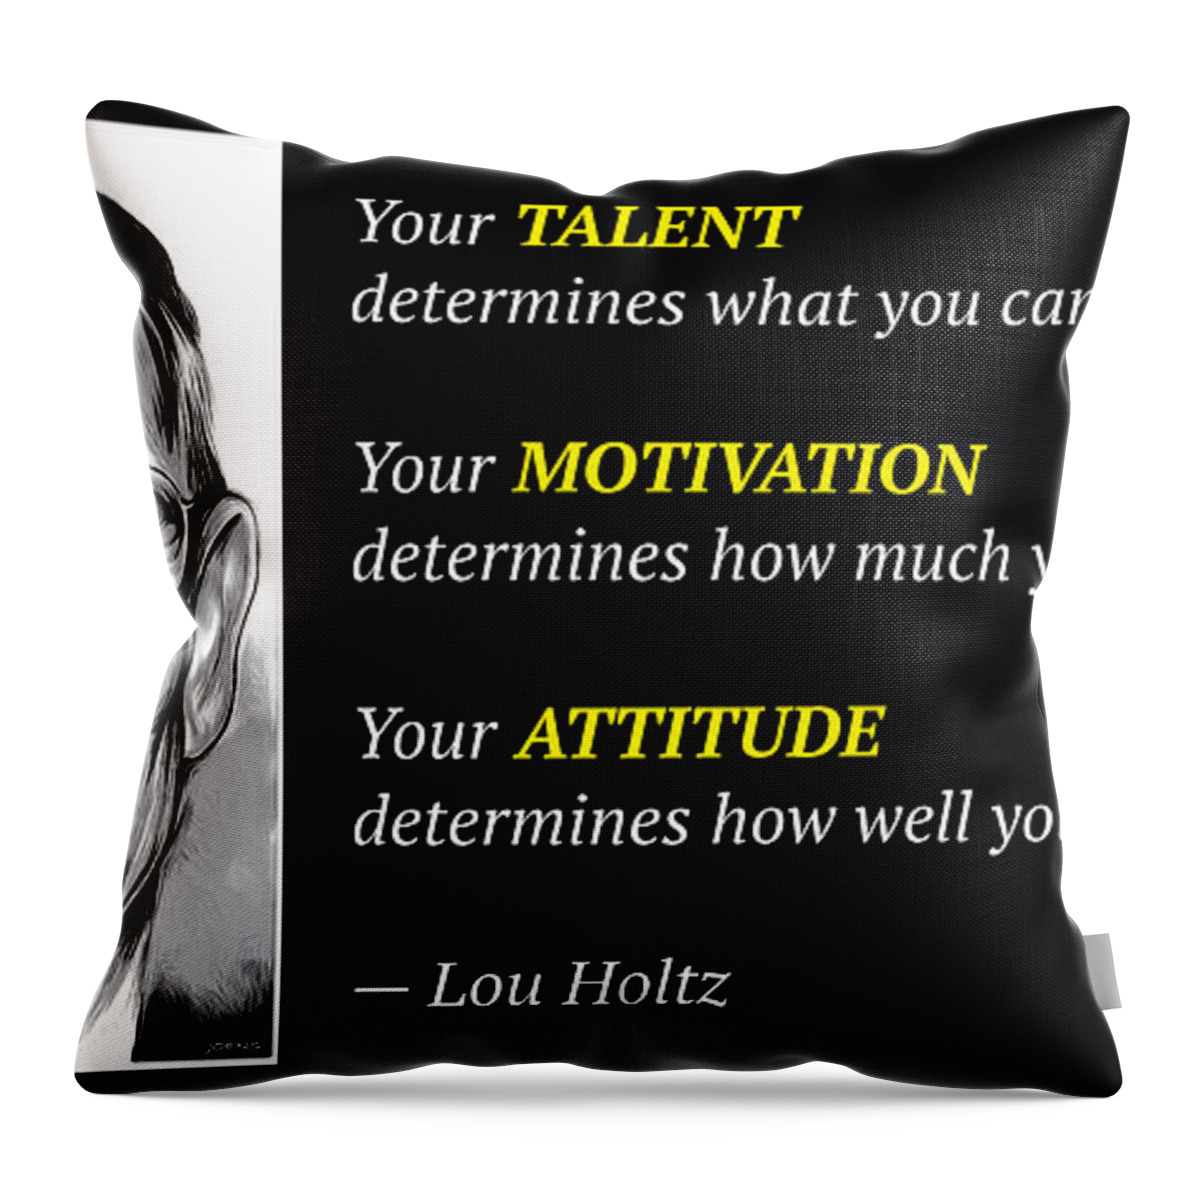 Lou Holtz Throw Pillow featuring the digital art Holtz Quote by Greg Joens